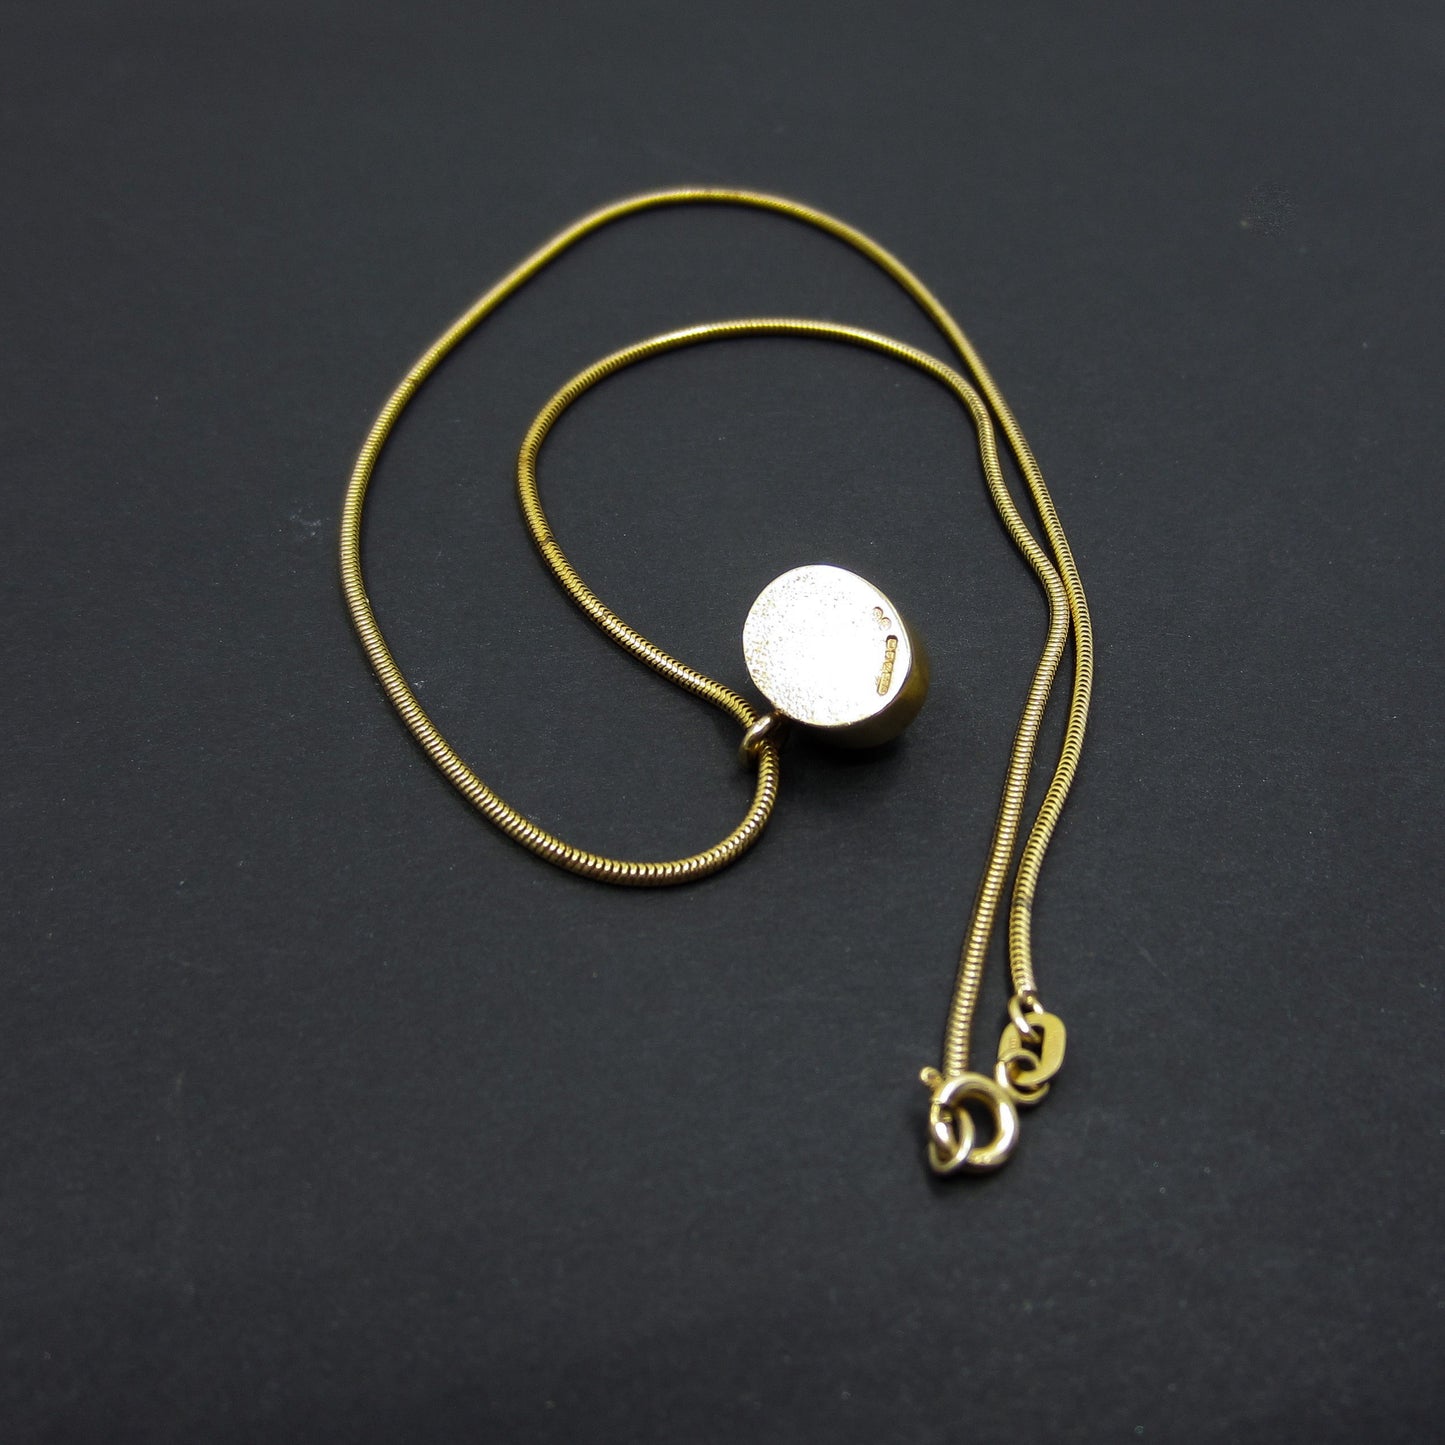 SOLD-Vintage Bezel Set Garnet Pendant and Chain, 9ct Dublin c. 2001